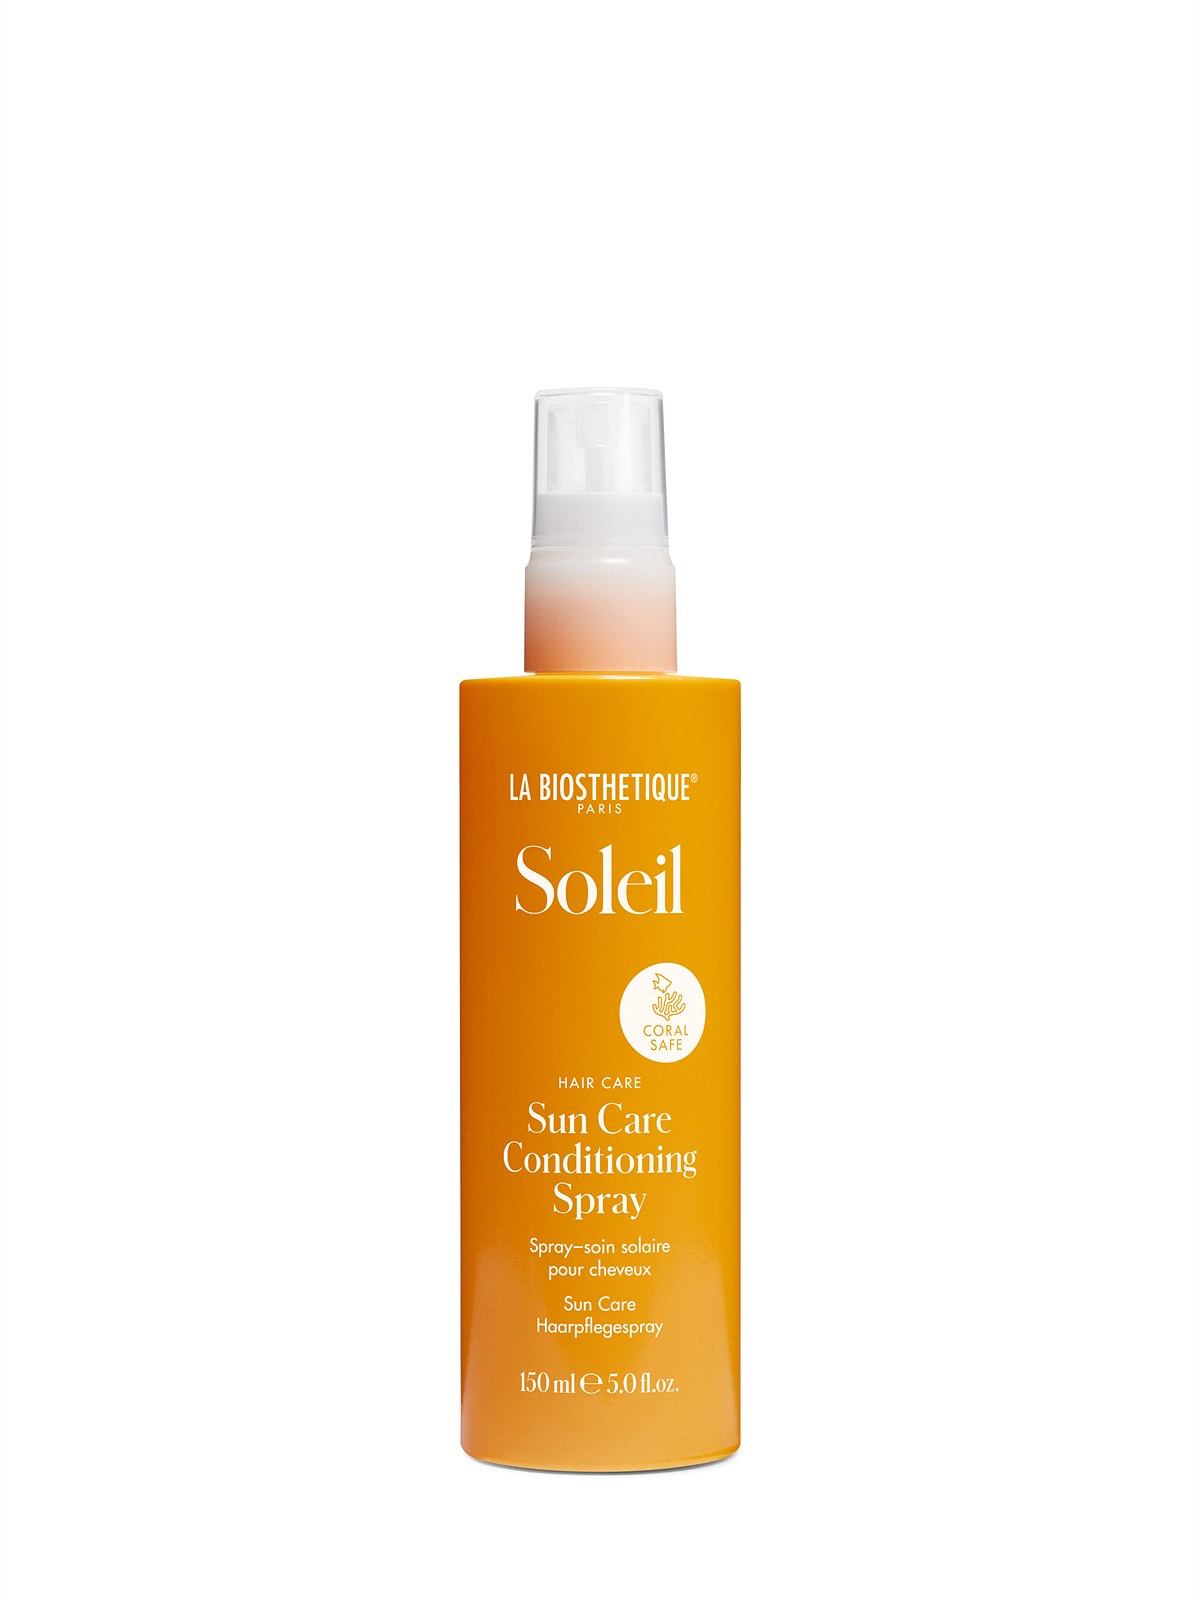 La Biosthétique_Hair-Soleil-Sun-Care-Conditioning-Spray-150ml_EUR 23,50